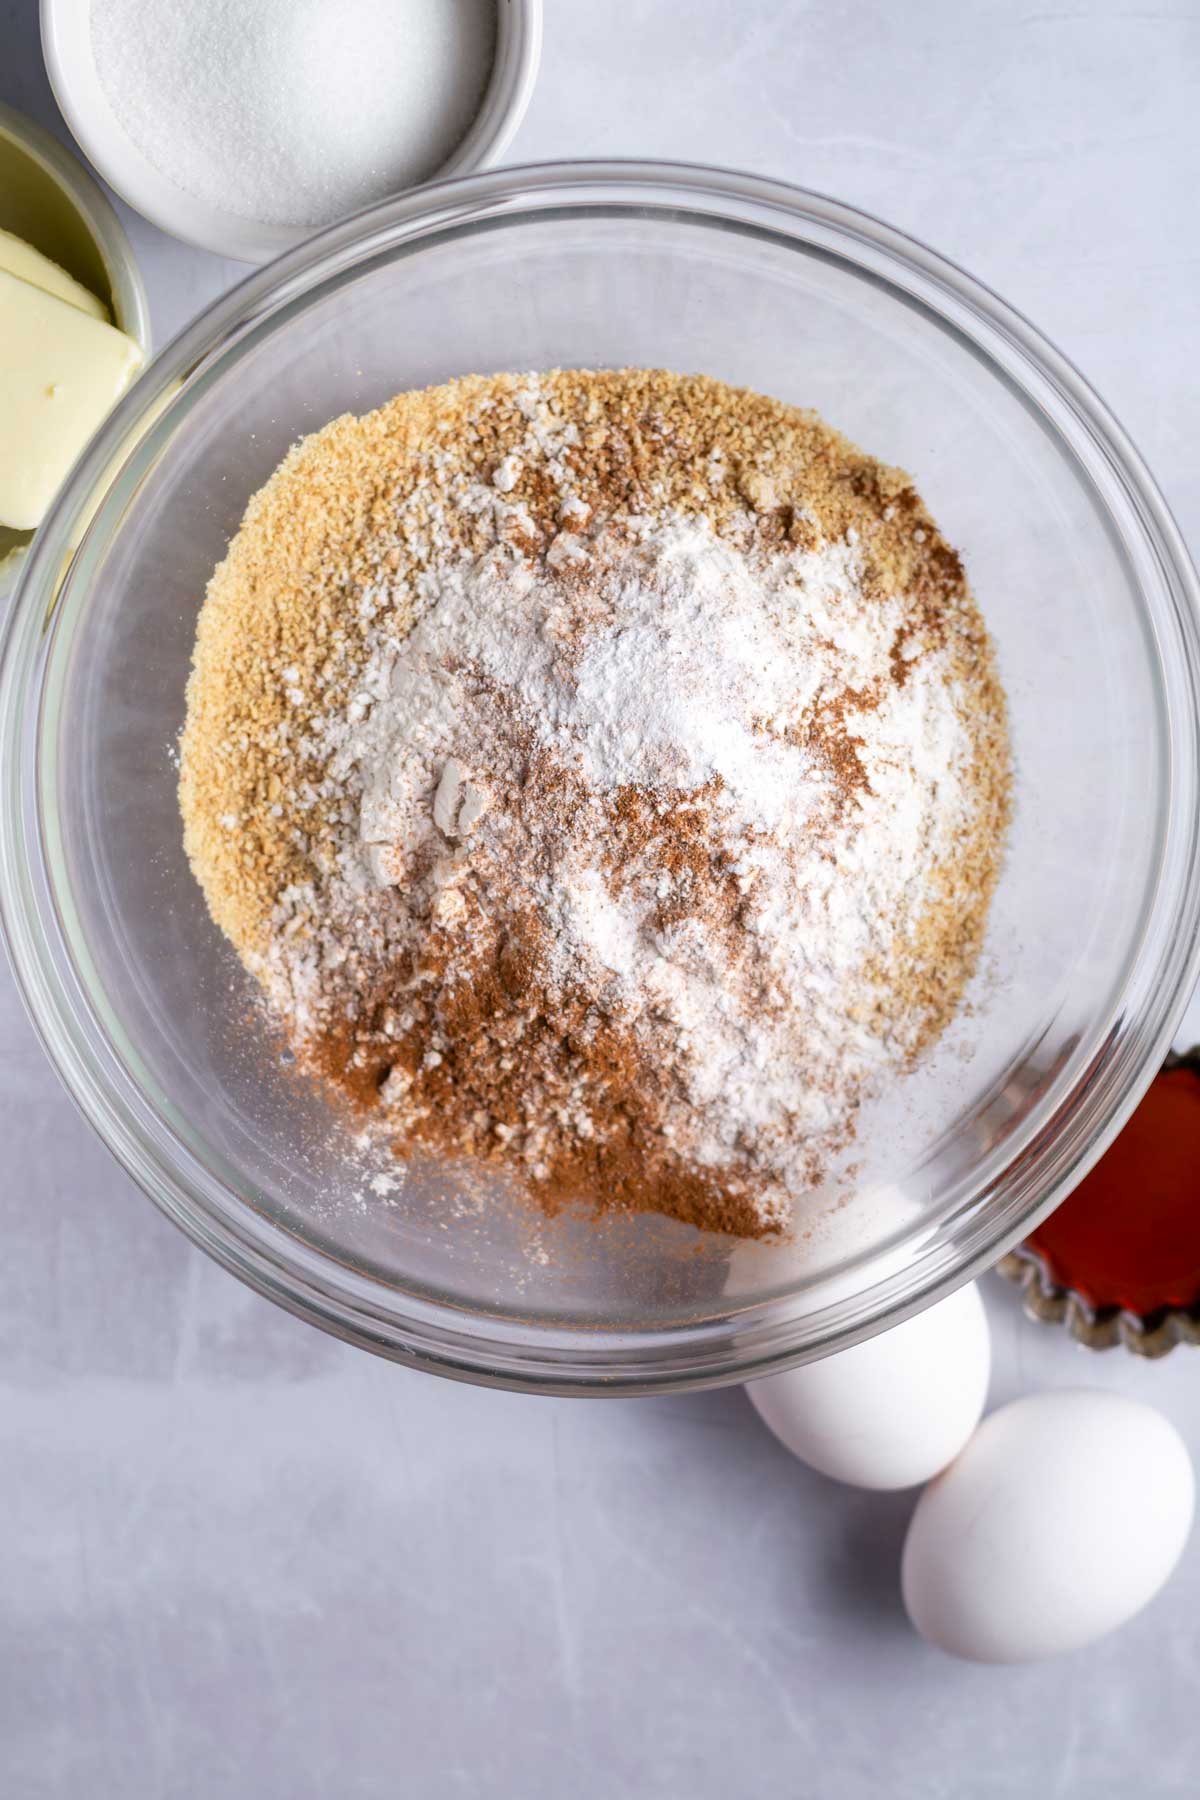 graham crackers, cinnamon, baking powder, and salt in a bowl